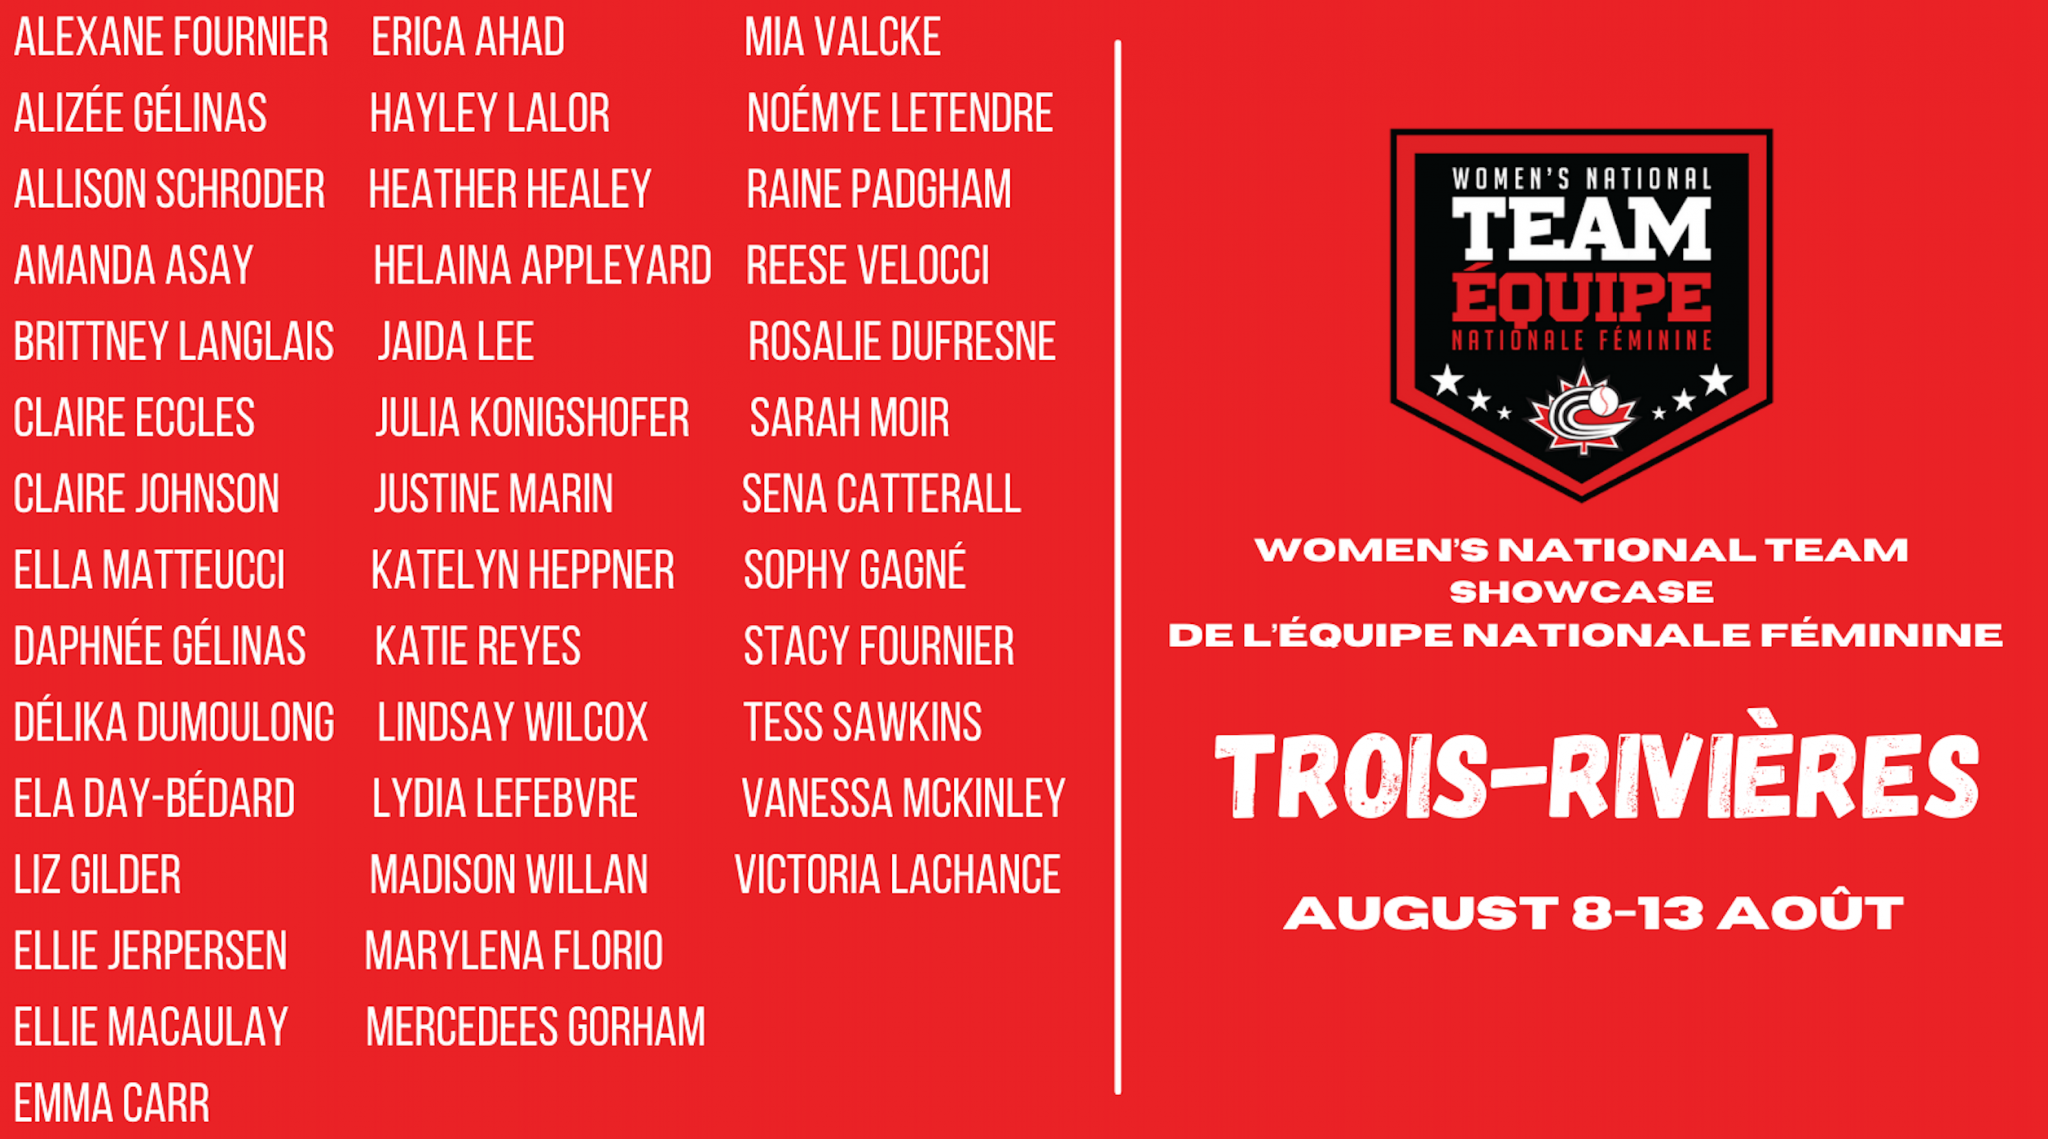 Baseball Canada announced the women’s national team showcase begins tomorrow in Trois-Rivières, Québec ©Baseball Canada